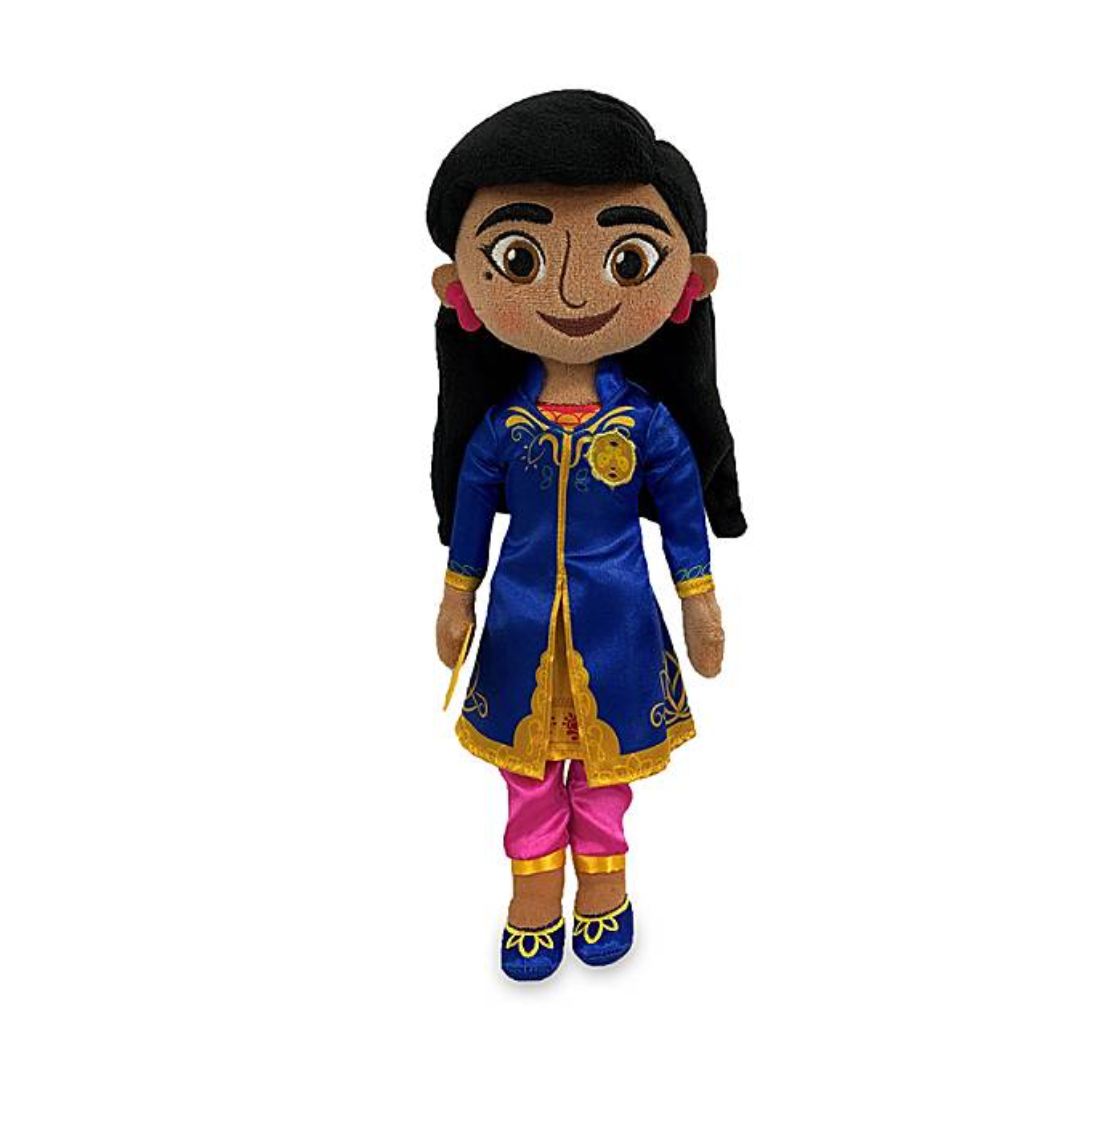 Shop Disney Junior's Mira, Royal Detective Toys